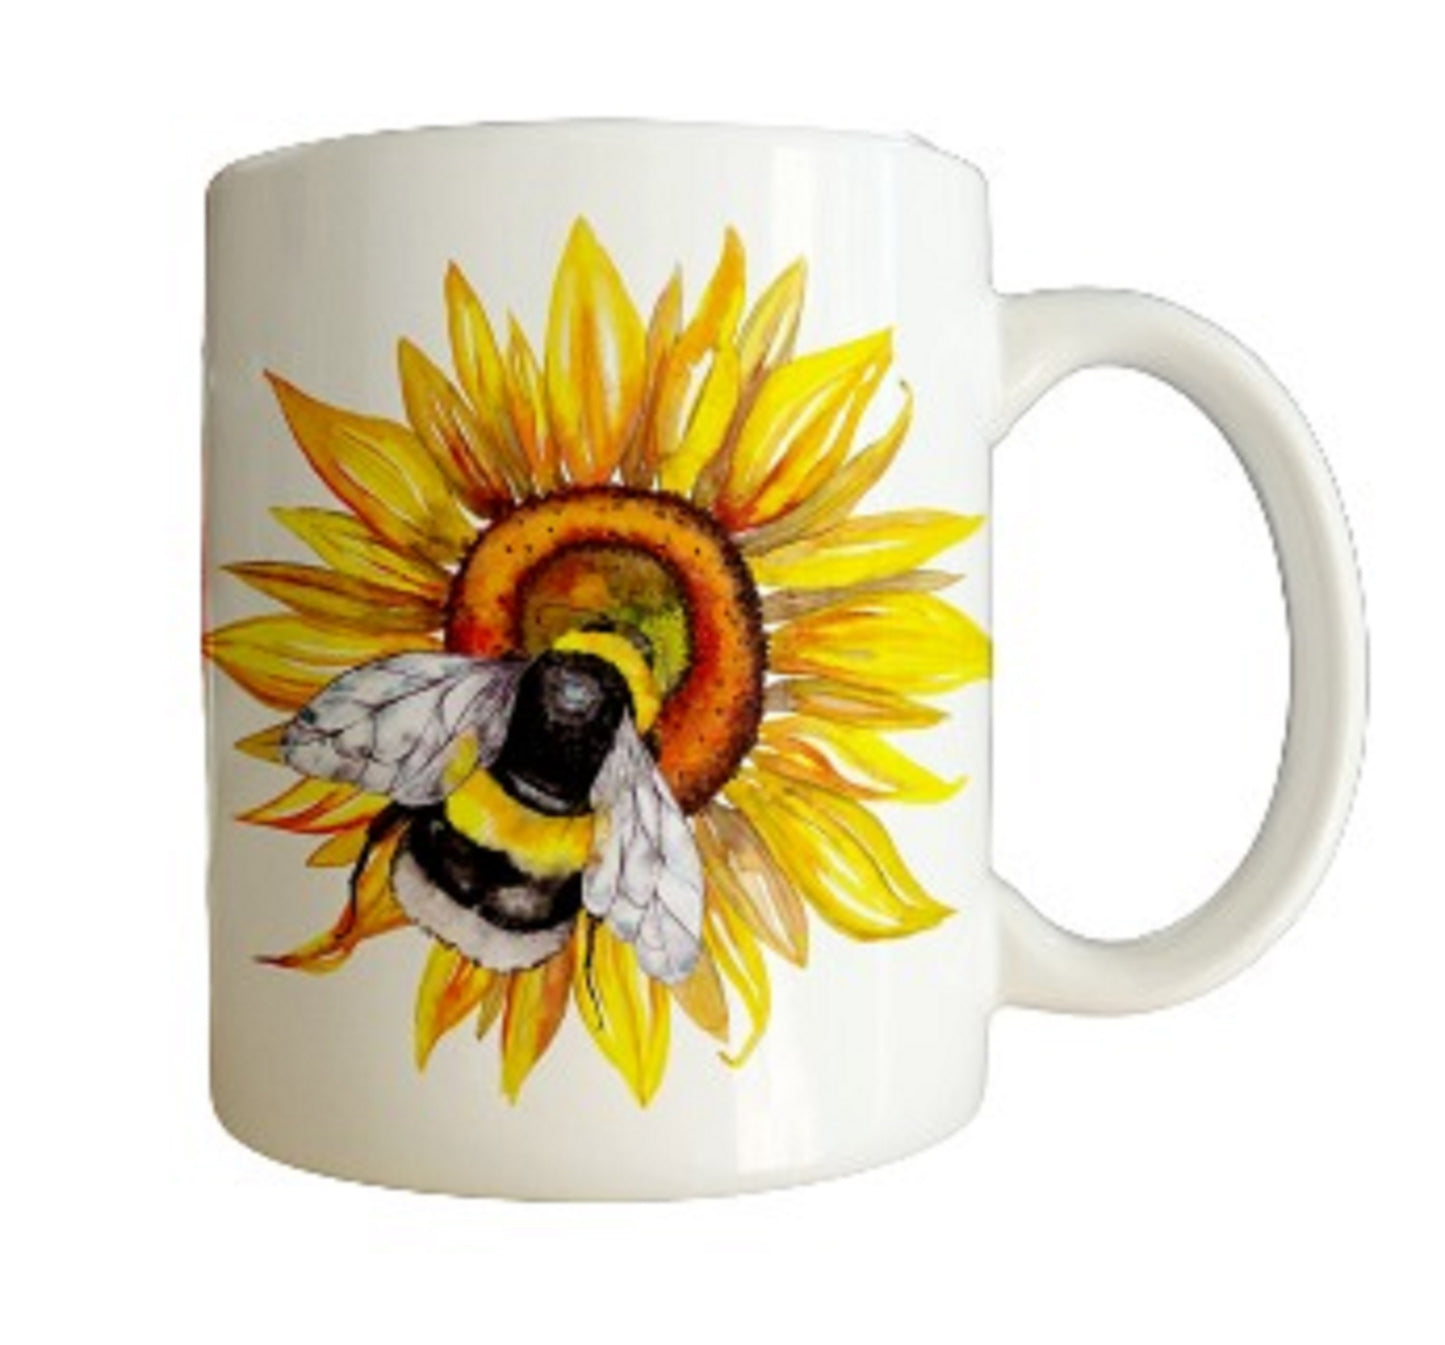  Bumble Bee on a Sunflower Coffee Mug by Free Spirit Accessories sold by Free Spirit Accessories